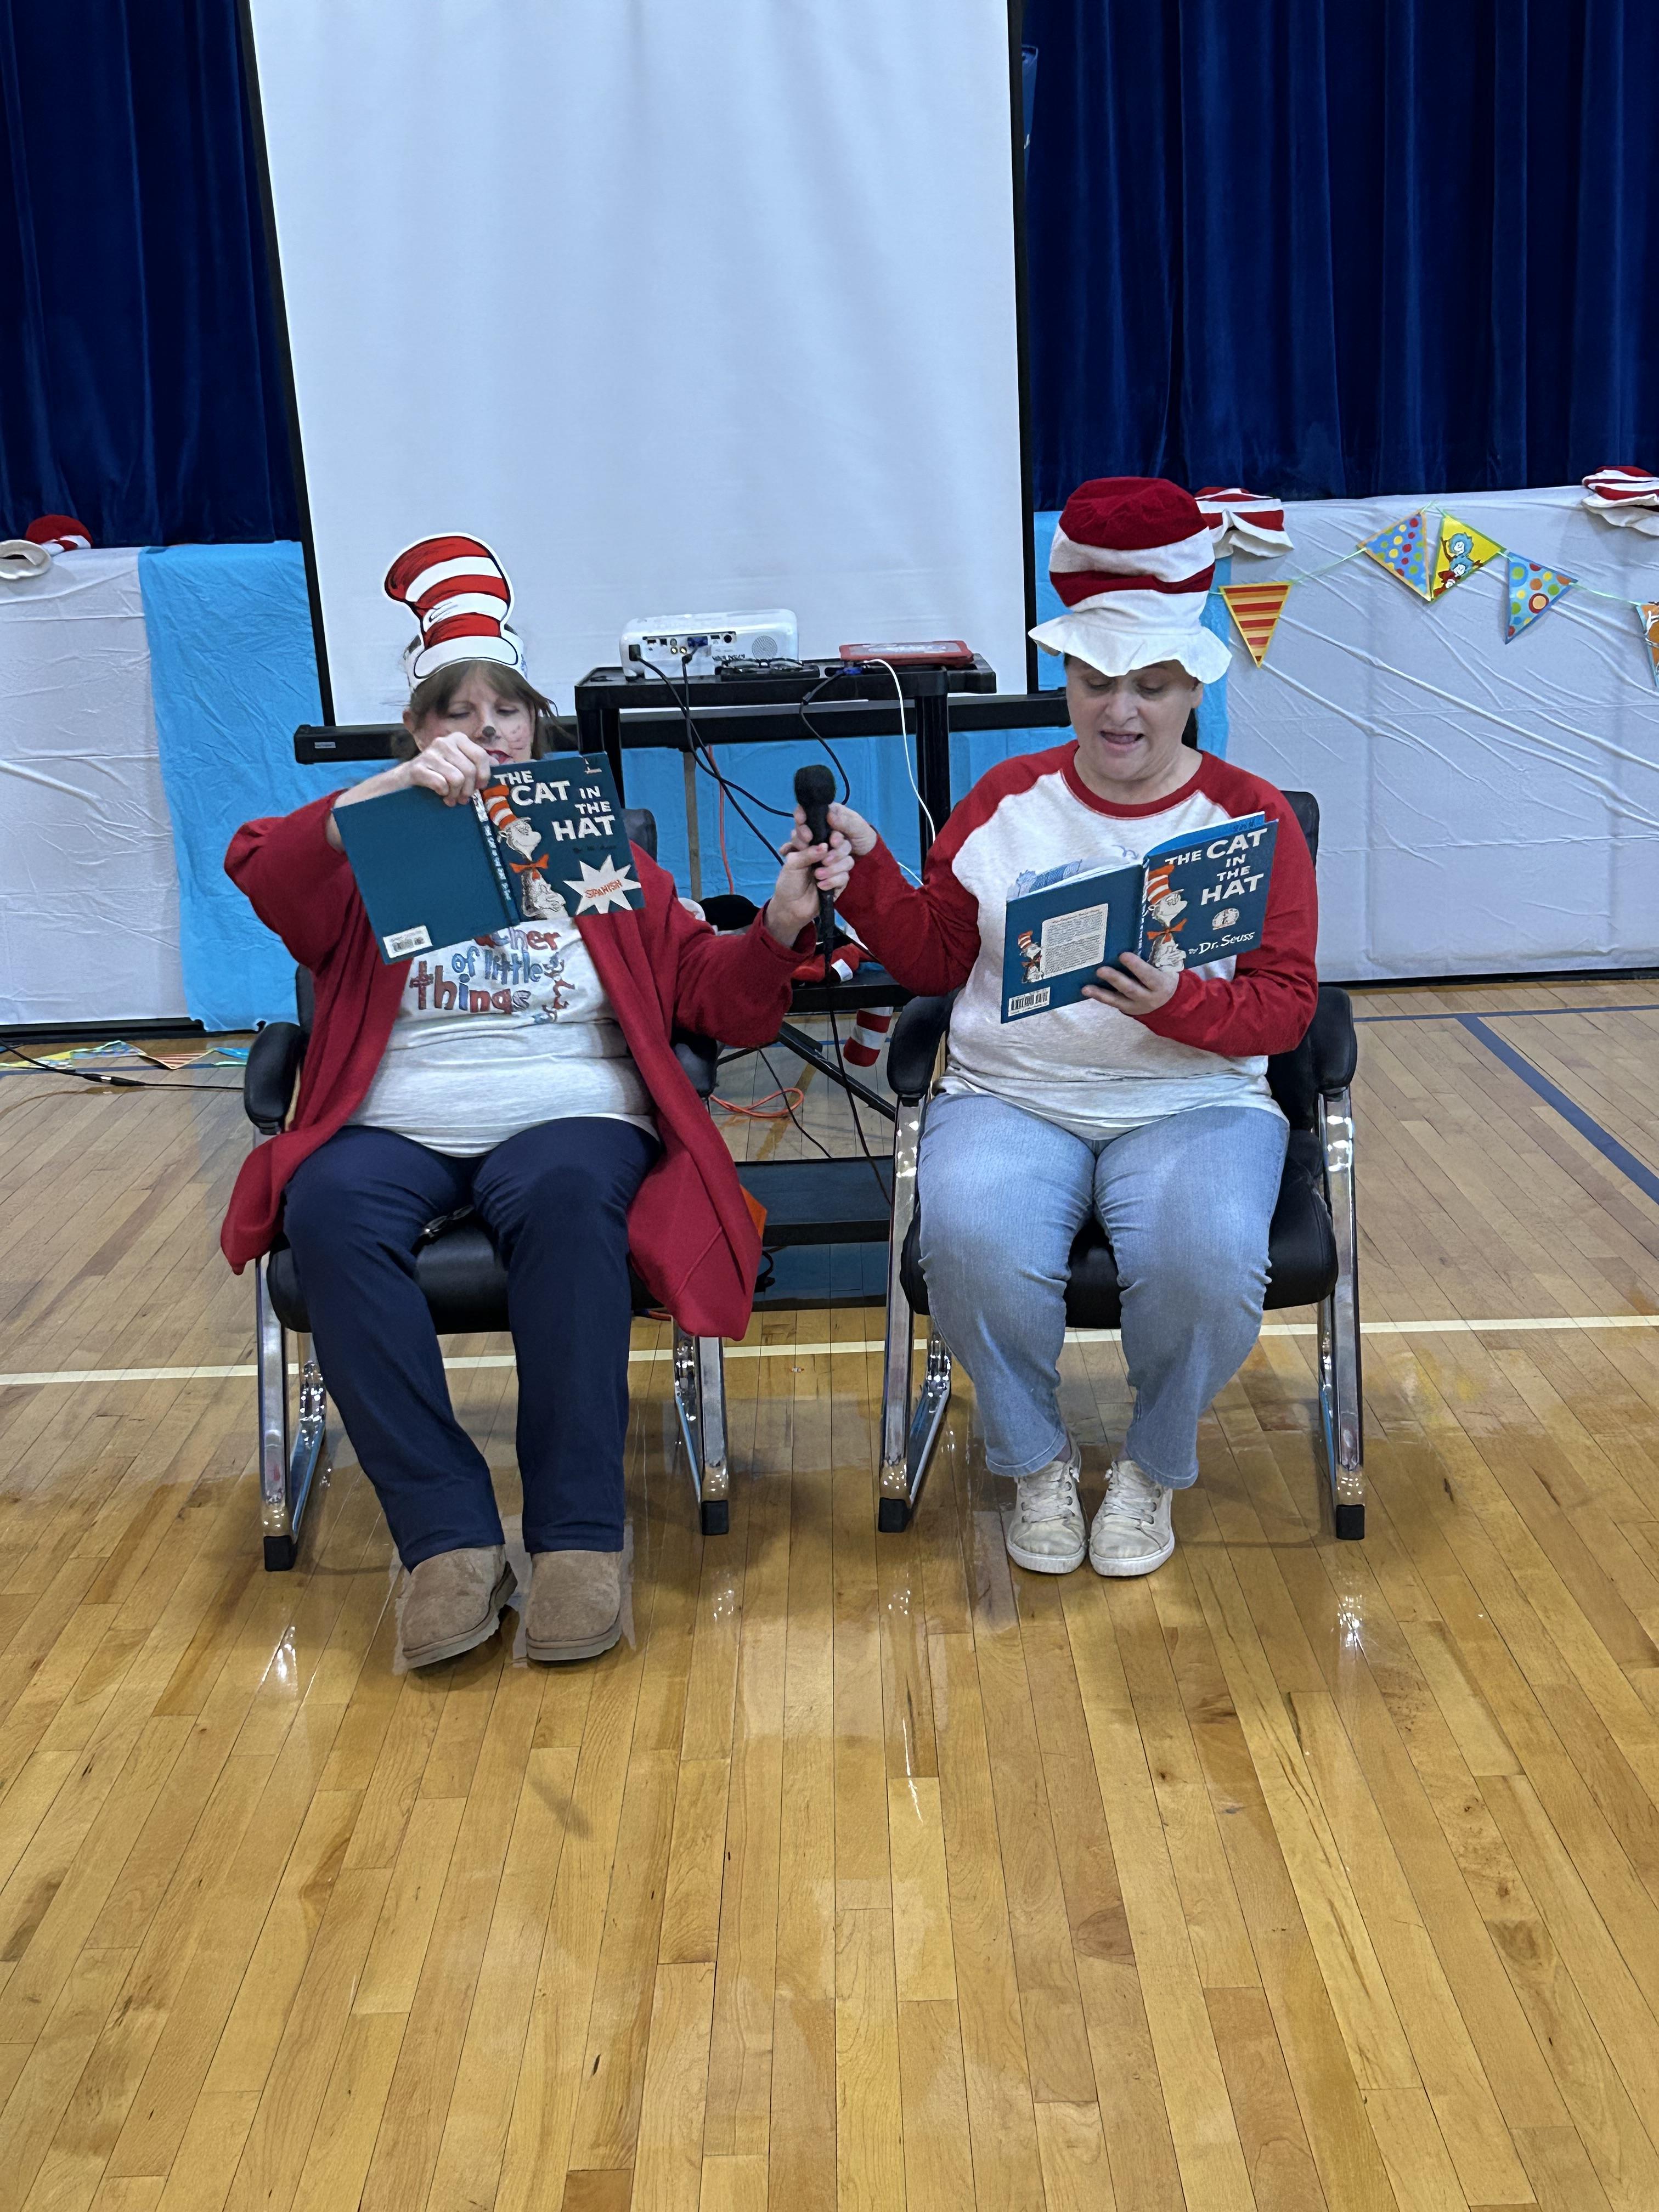 Celebrating Read Across America at the Washington School